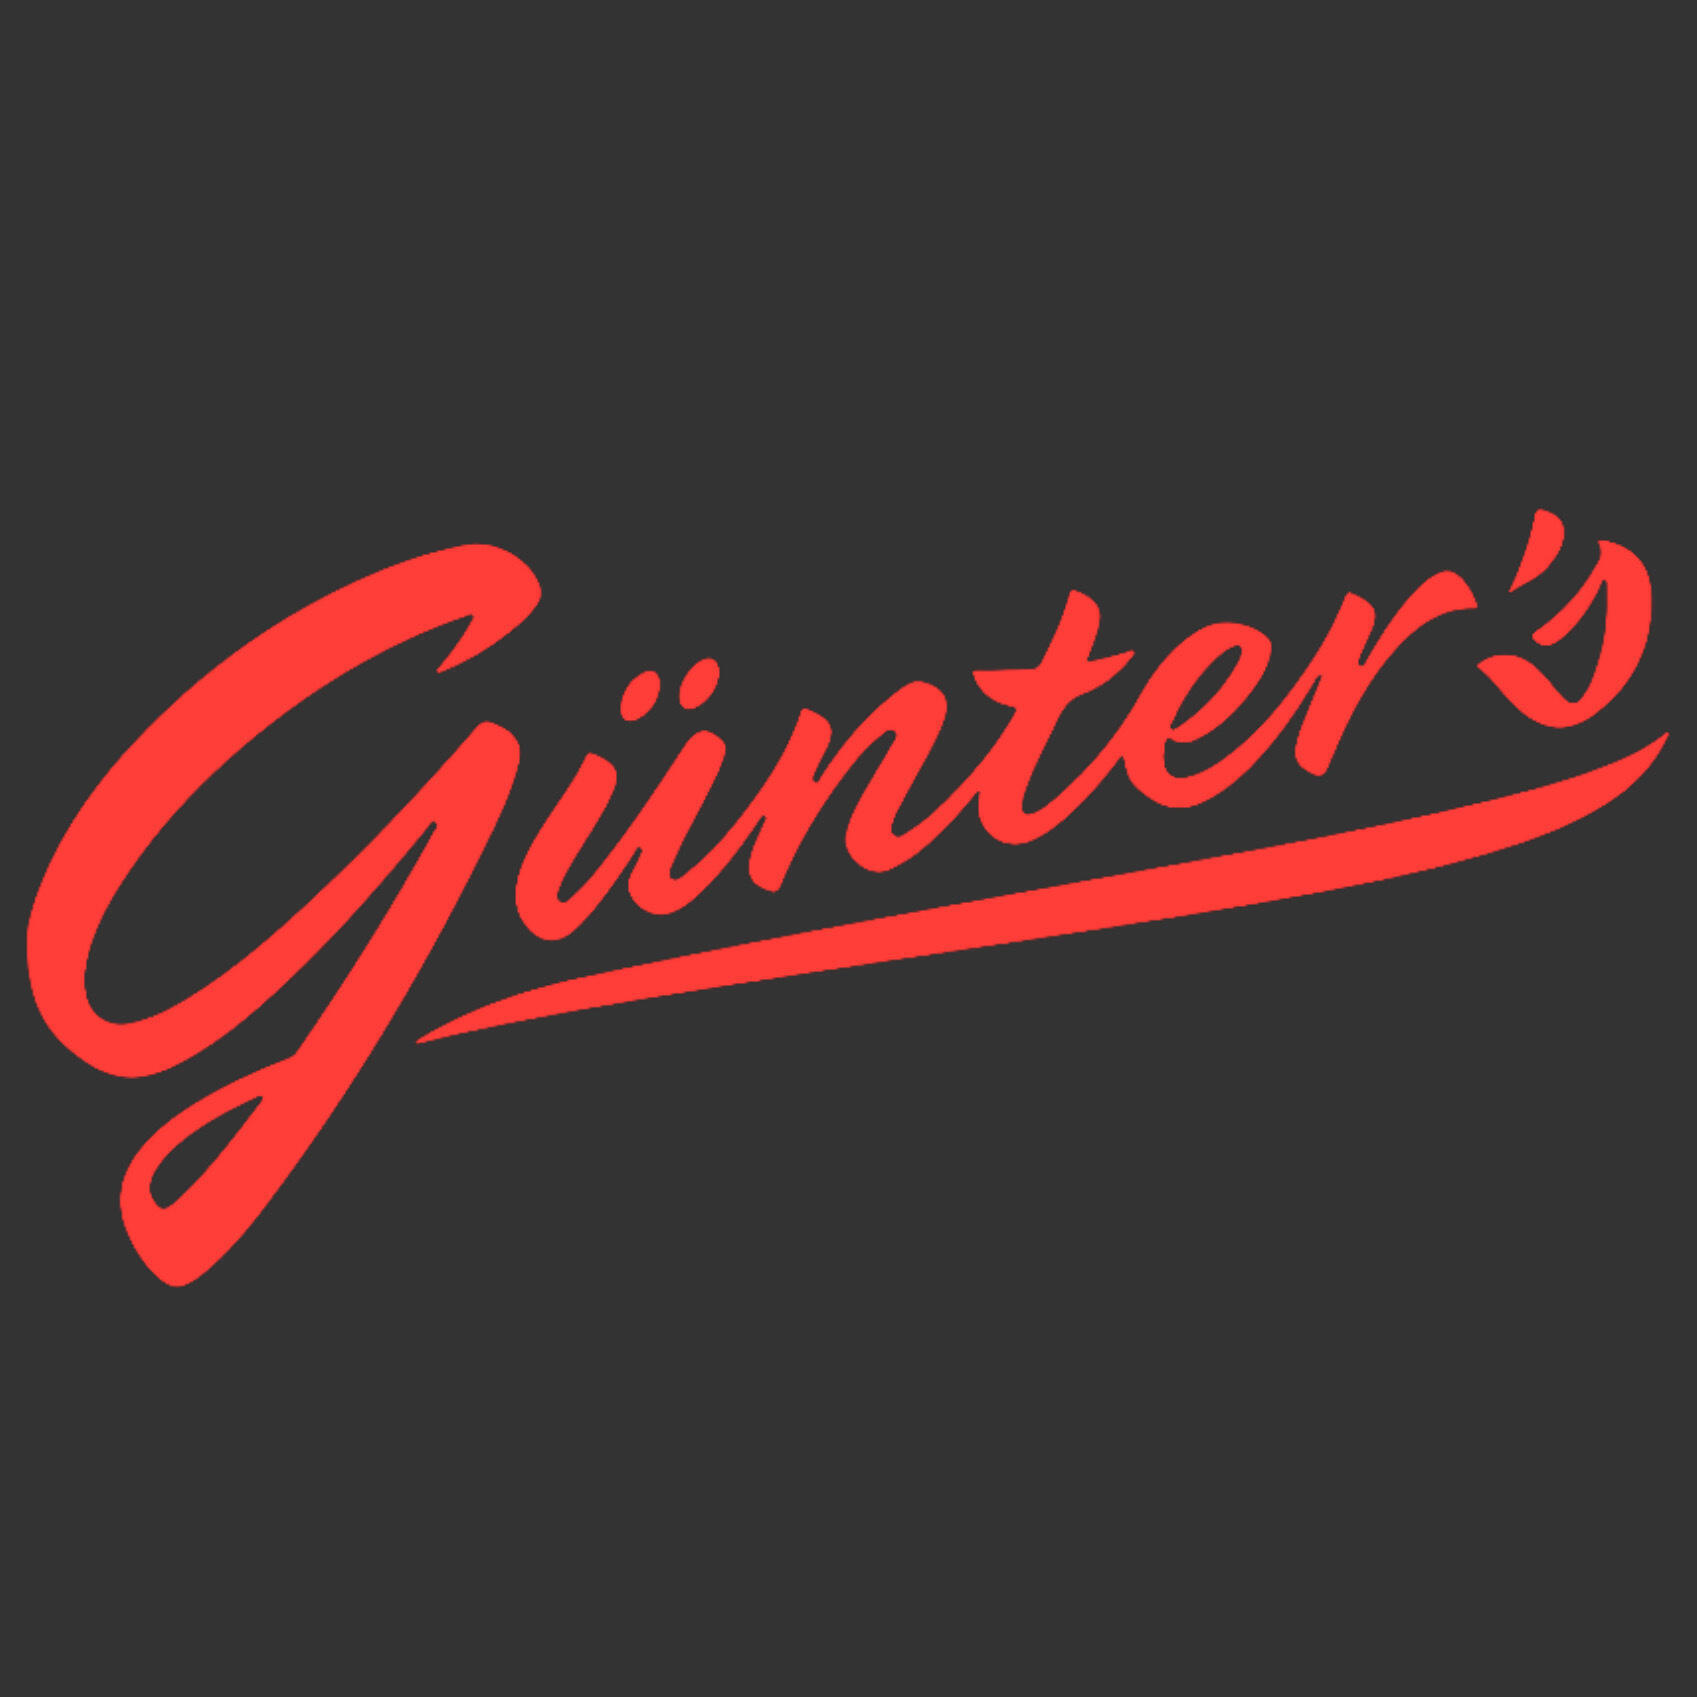 Gunter’s